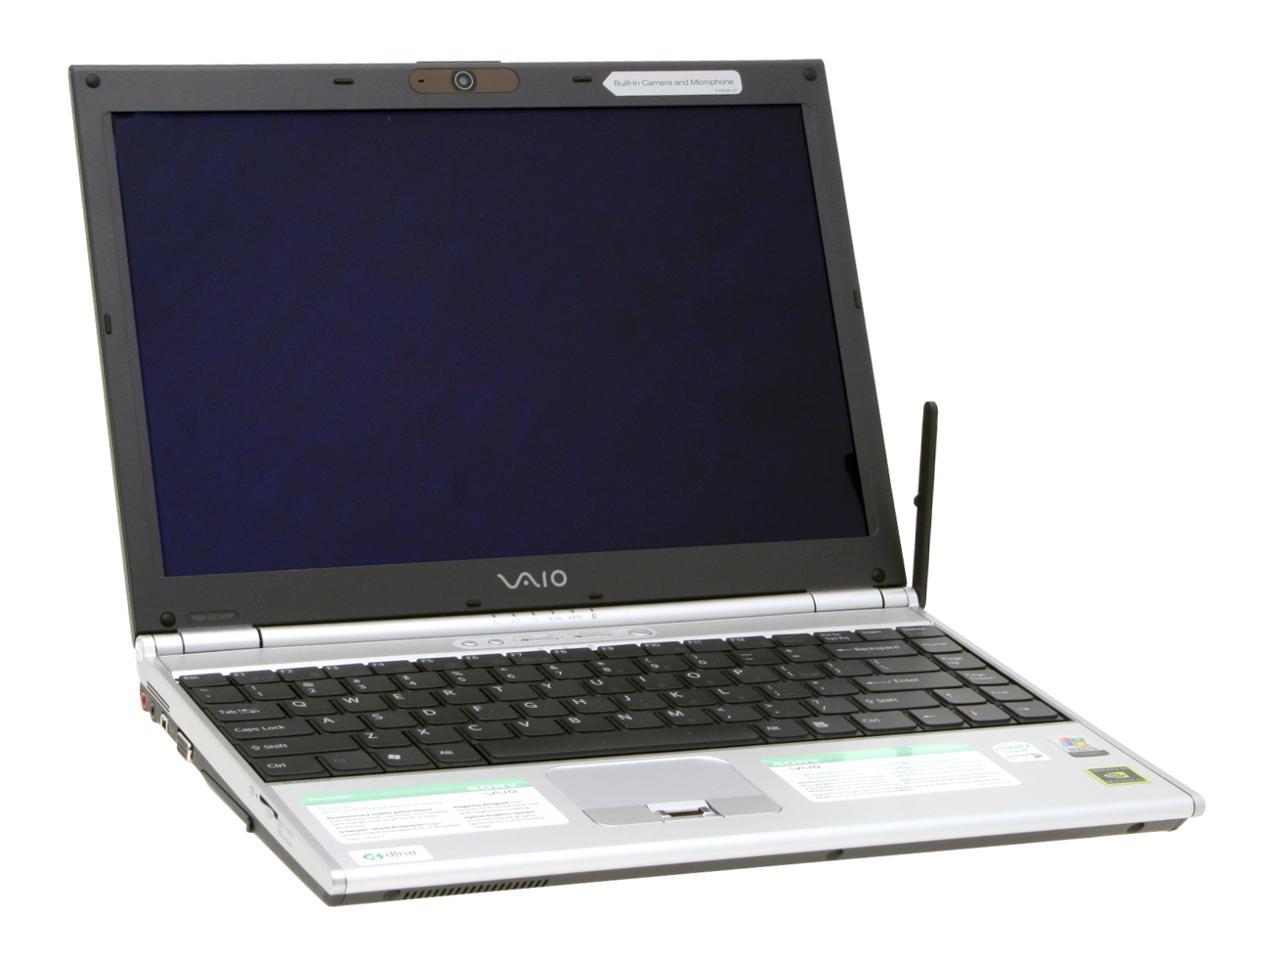 Sony Laptop Vaio Sz Series Intel Core 2 Duo T5600 1gb Memory 120gb Hdd Nvidia Geforce Go 7400